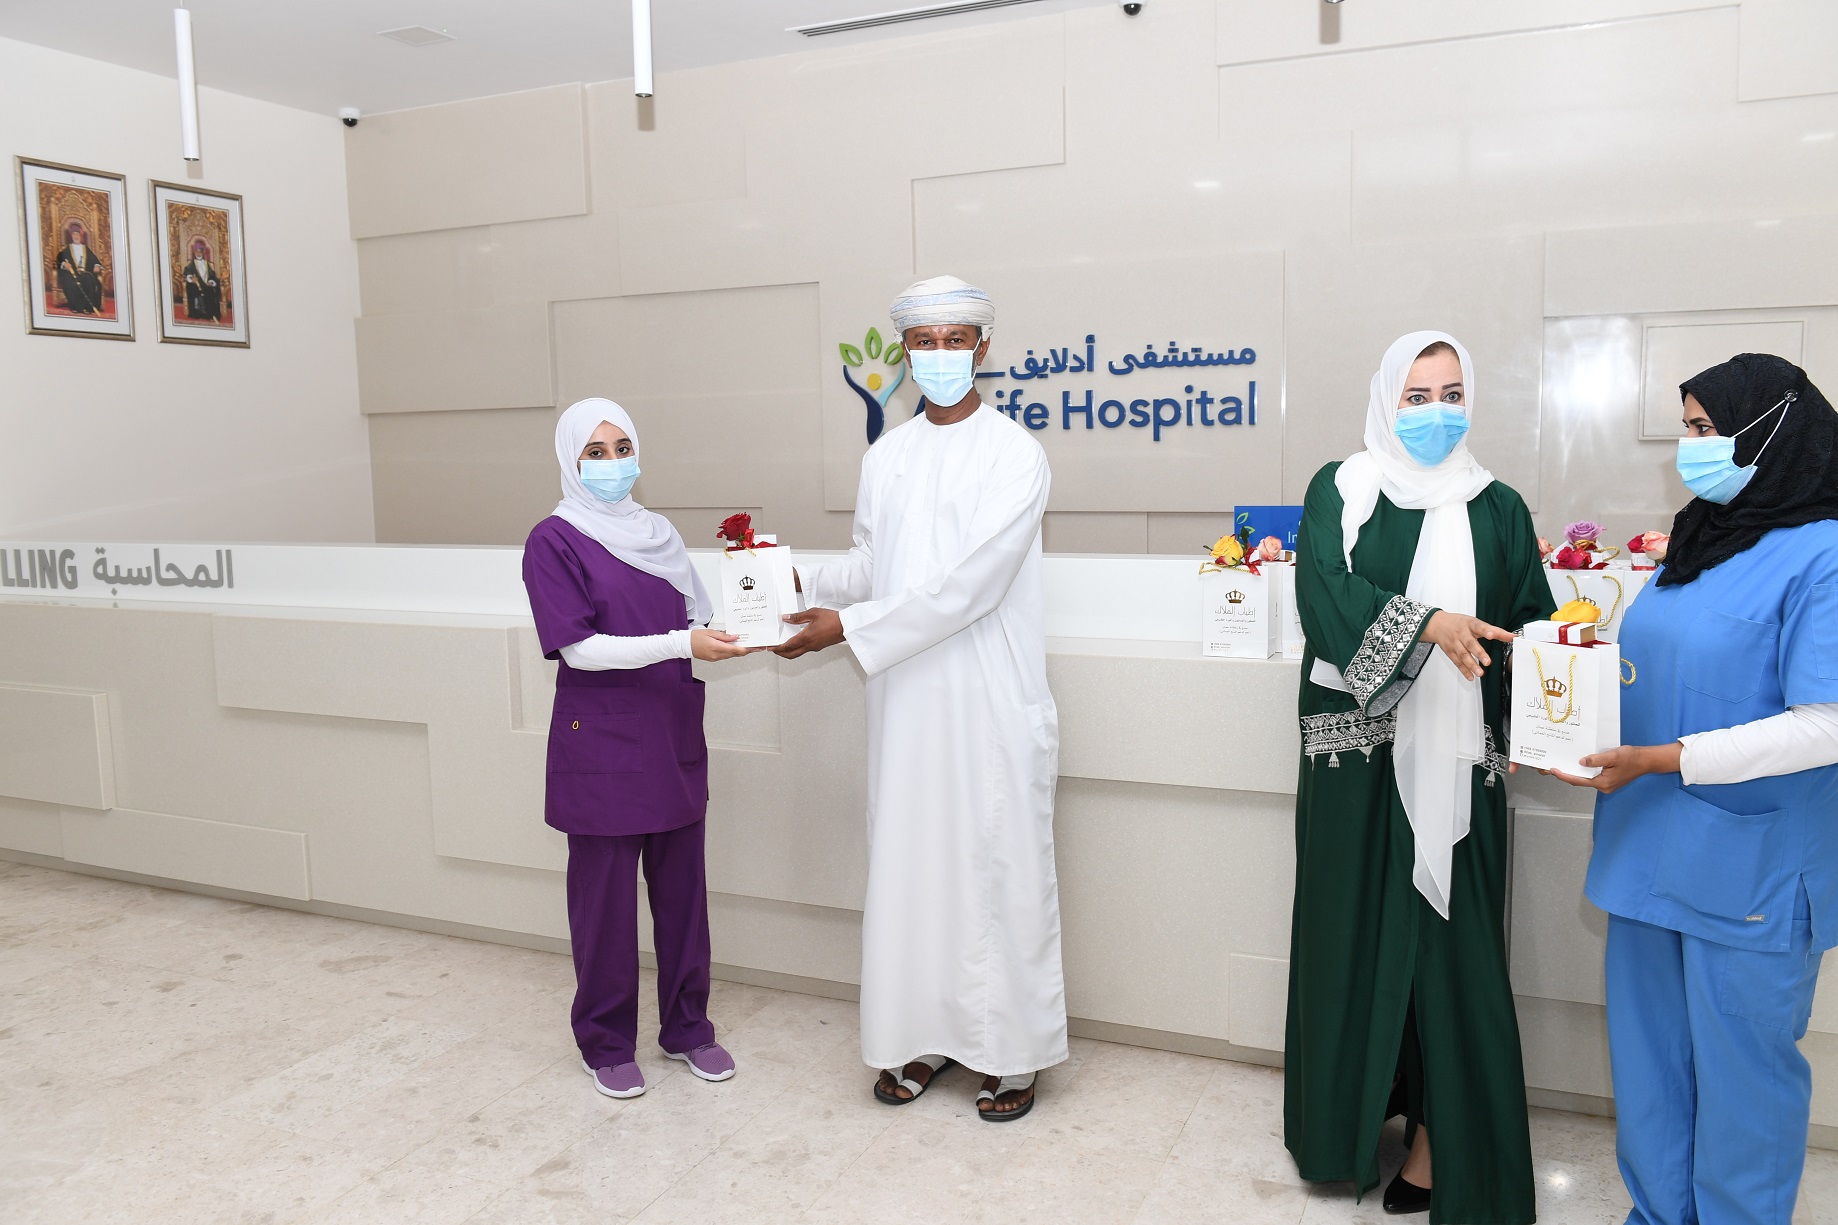 AdLife Hospital volunteers honoured on World Humanitarian Day